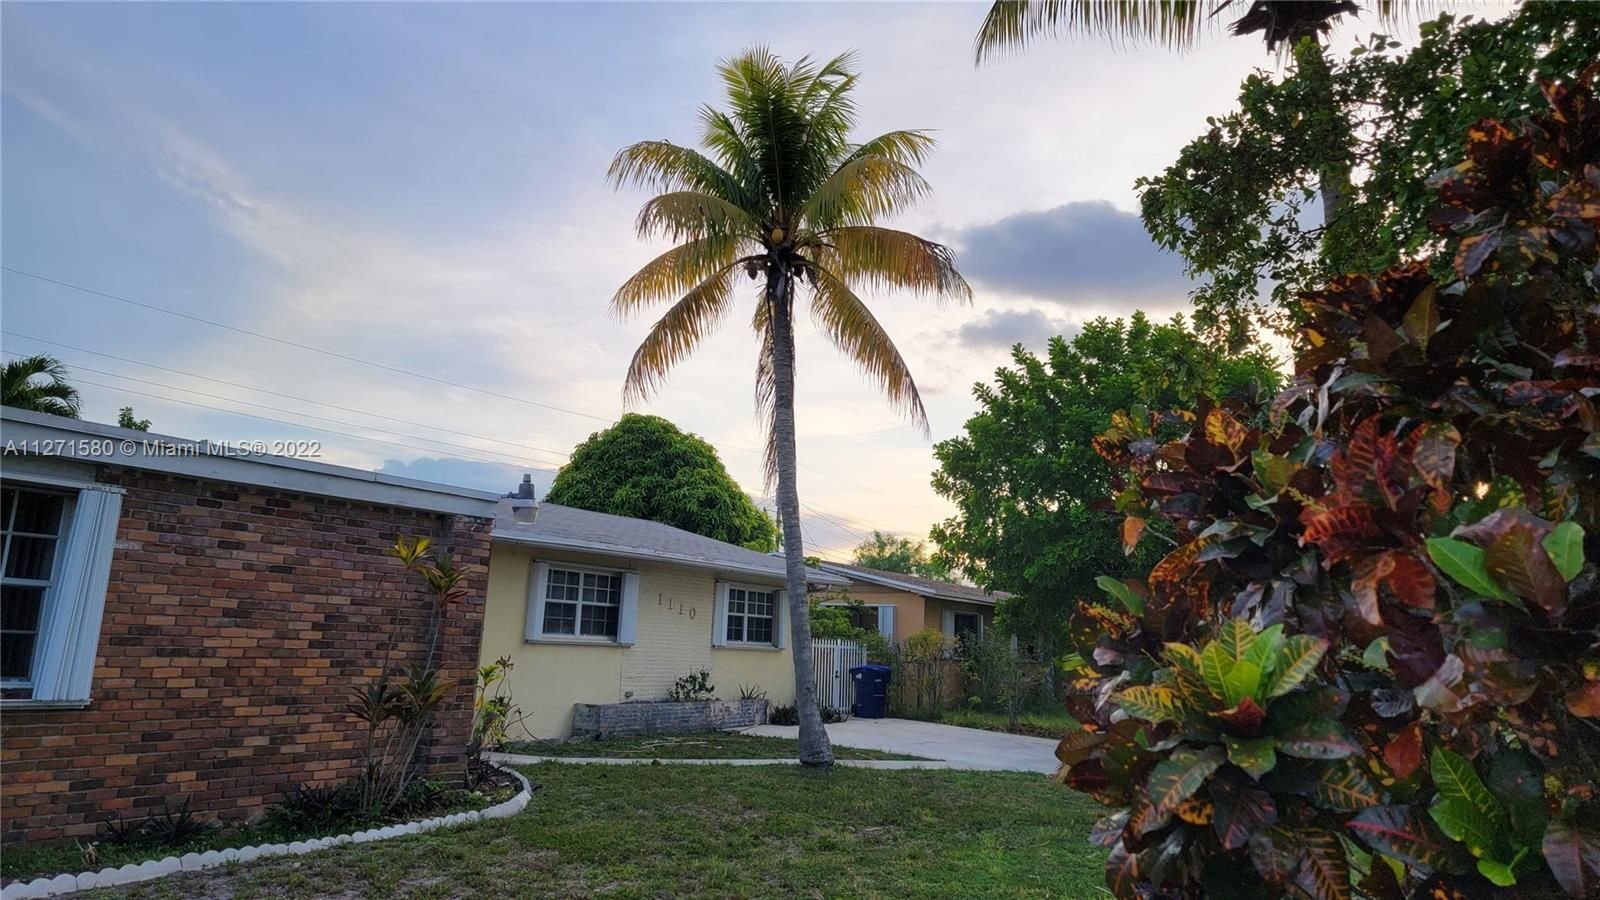 Real estate property located at 1110 196th Ter, Miami-Dade County, Miami, FL